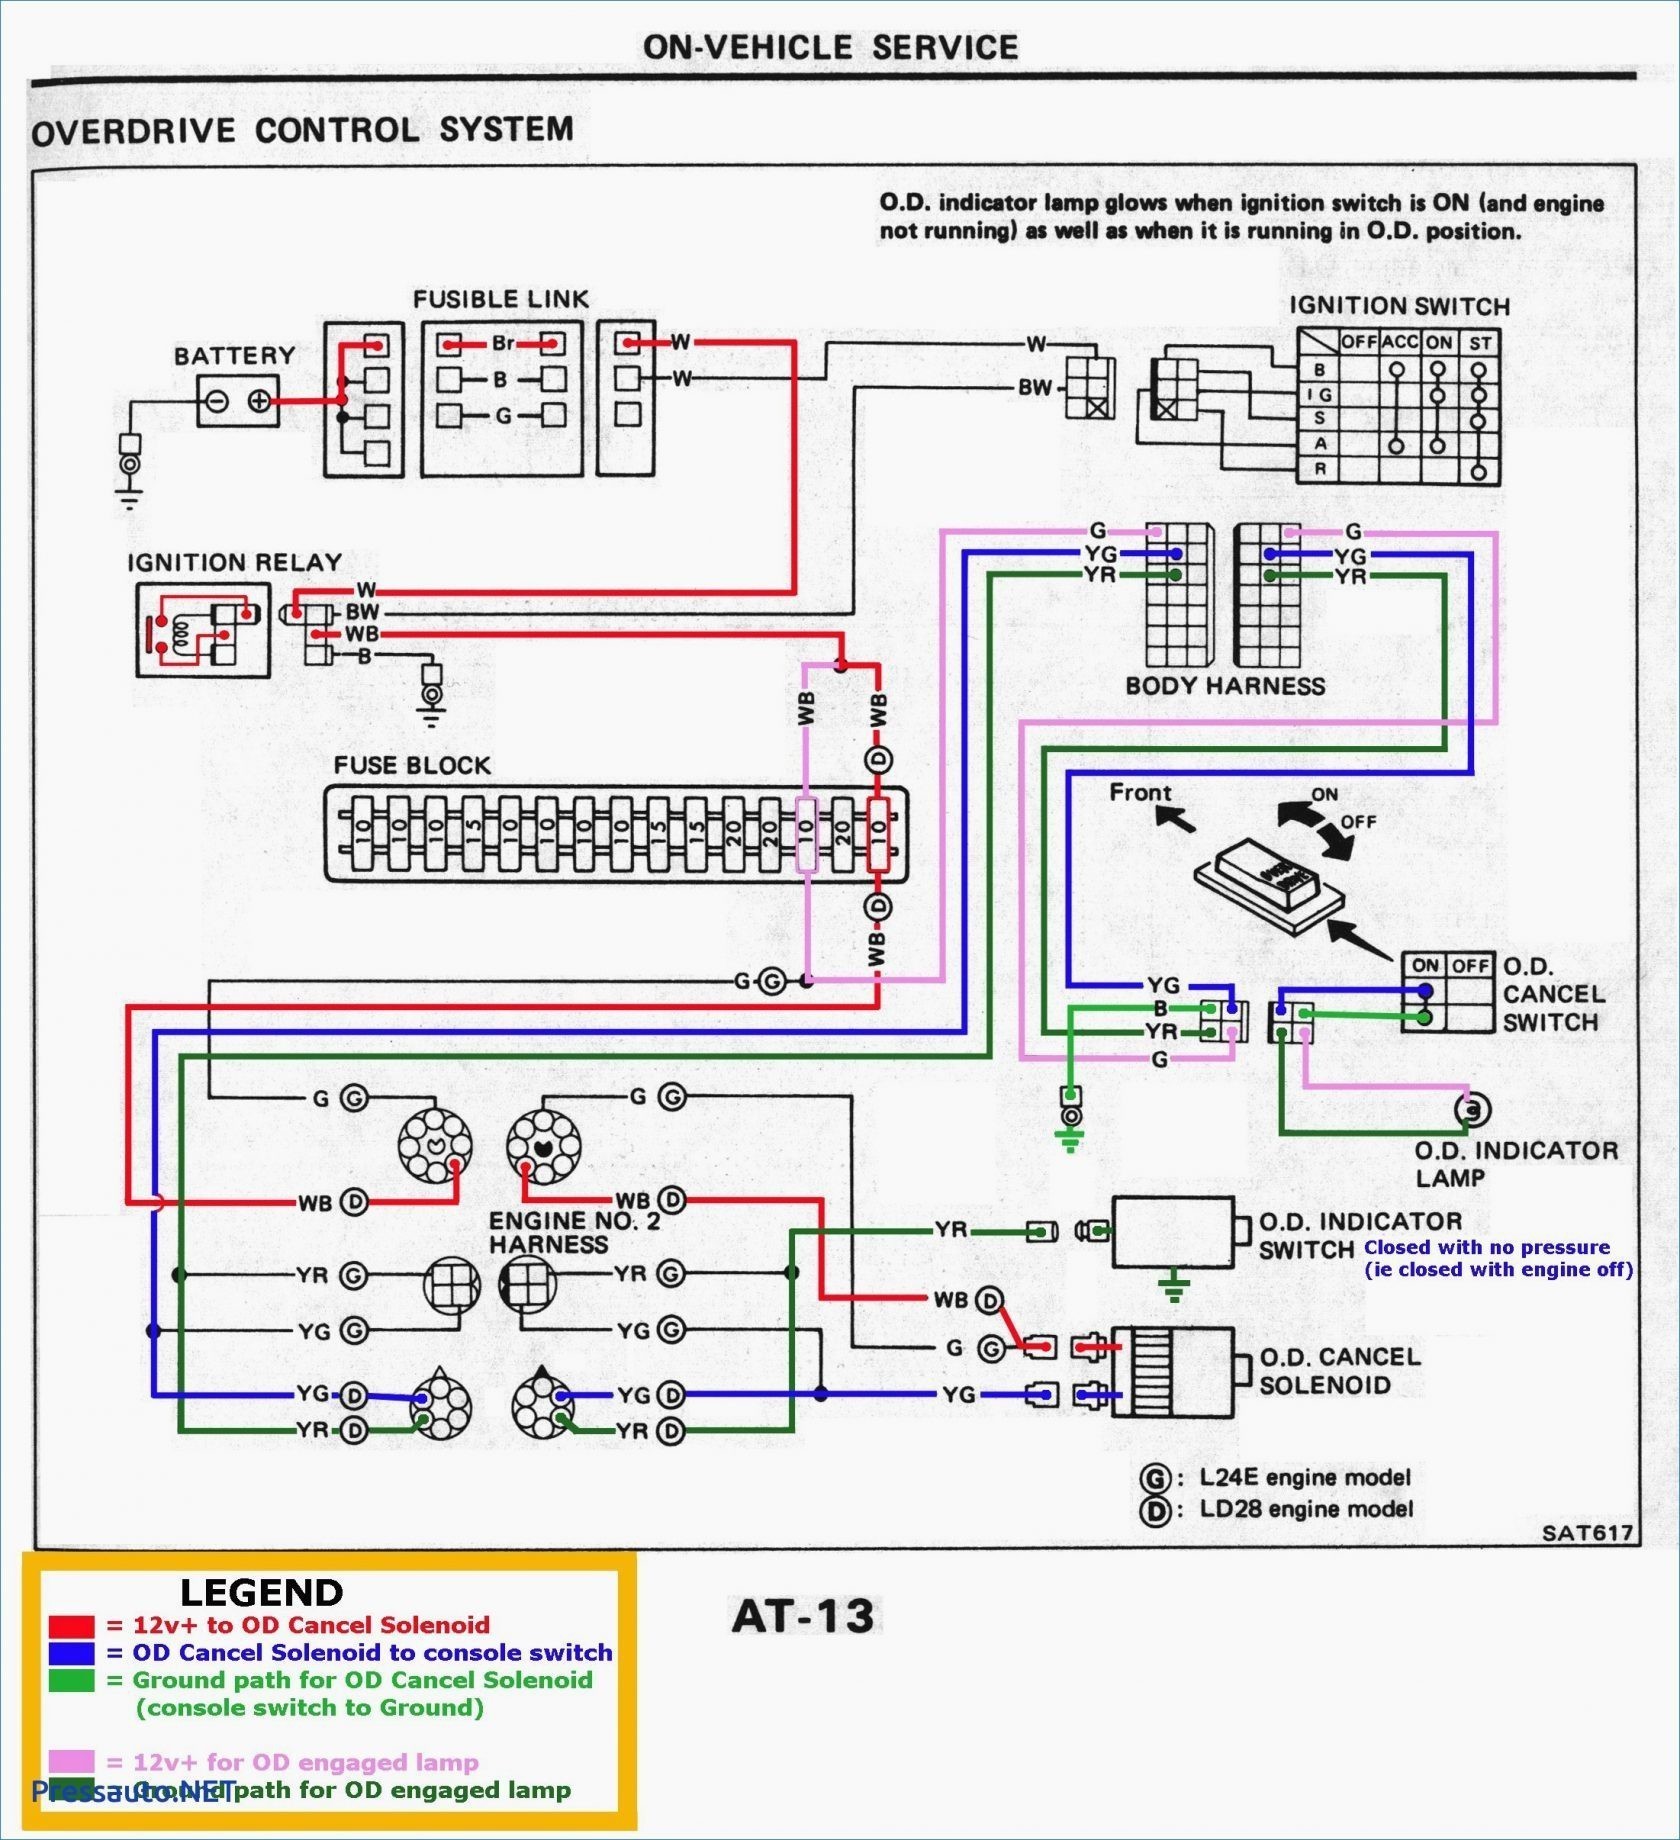 Electric Window Wiring Diagram Chevrolet Traverse Trailer Wiring Diagram Wiring Diagram Paper Of Electric Window Wiring Diagram